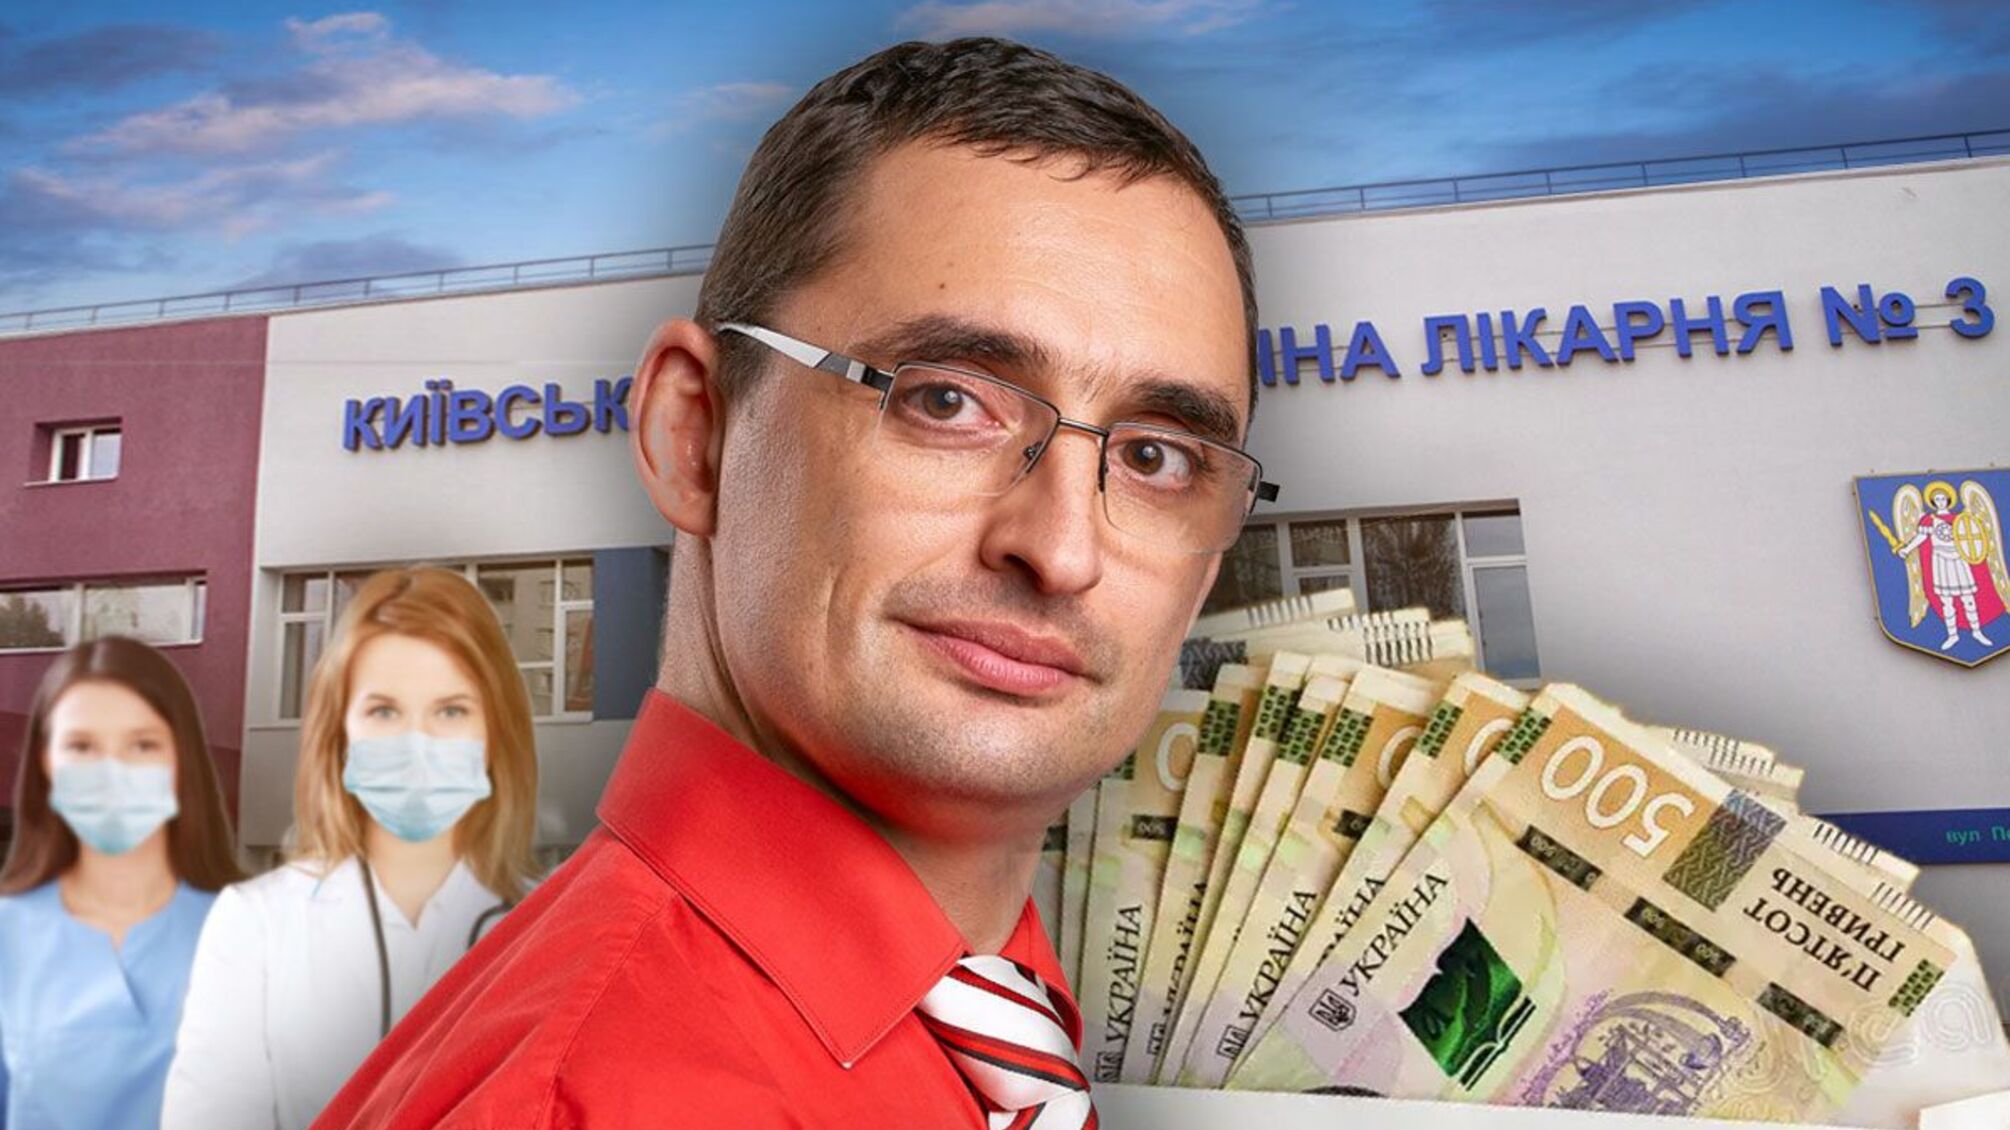 Григорий Гришкан шантажирует Киевскую больницу